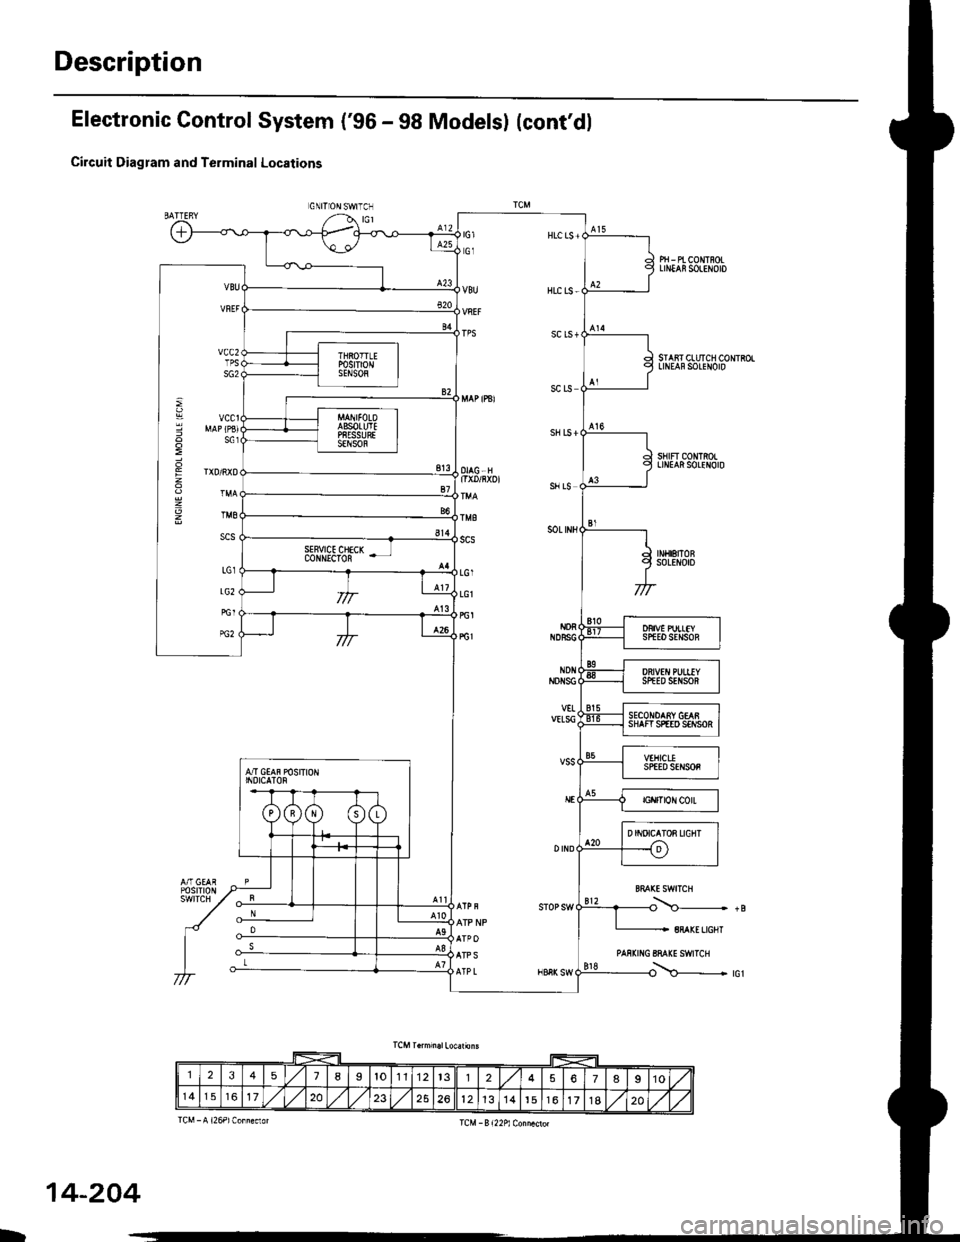 HONDA CIVIC 1997 6.G Workshop Manual Description
Electronic Control System (gG - 98 Modelsl (contdl
Circuit Diagram and Terminal Locations
GNITIONSWITCN
Pri - Pt coNTnoLLrN ns0LtN0t0
SIAiT CLUTCH CONTSOLLINEAFSOLENOID
sHtFT CONmOILINIA